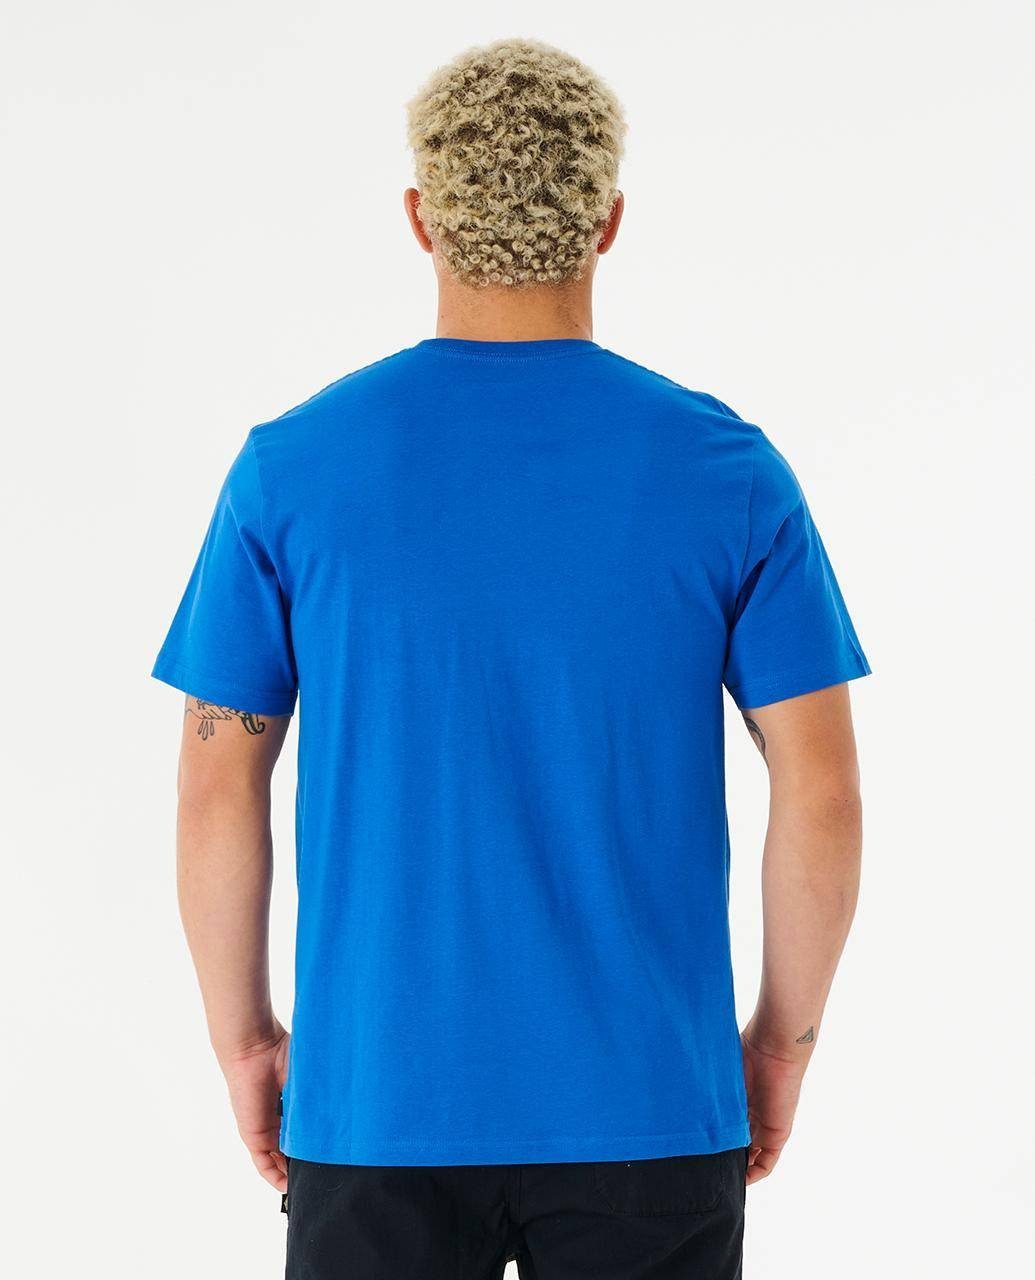 Revival Rip T-Shirt Waving Surf Print-Shirt Curl